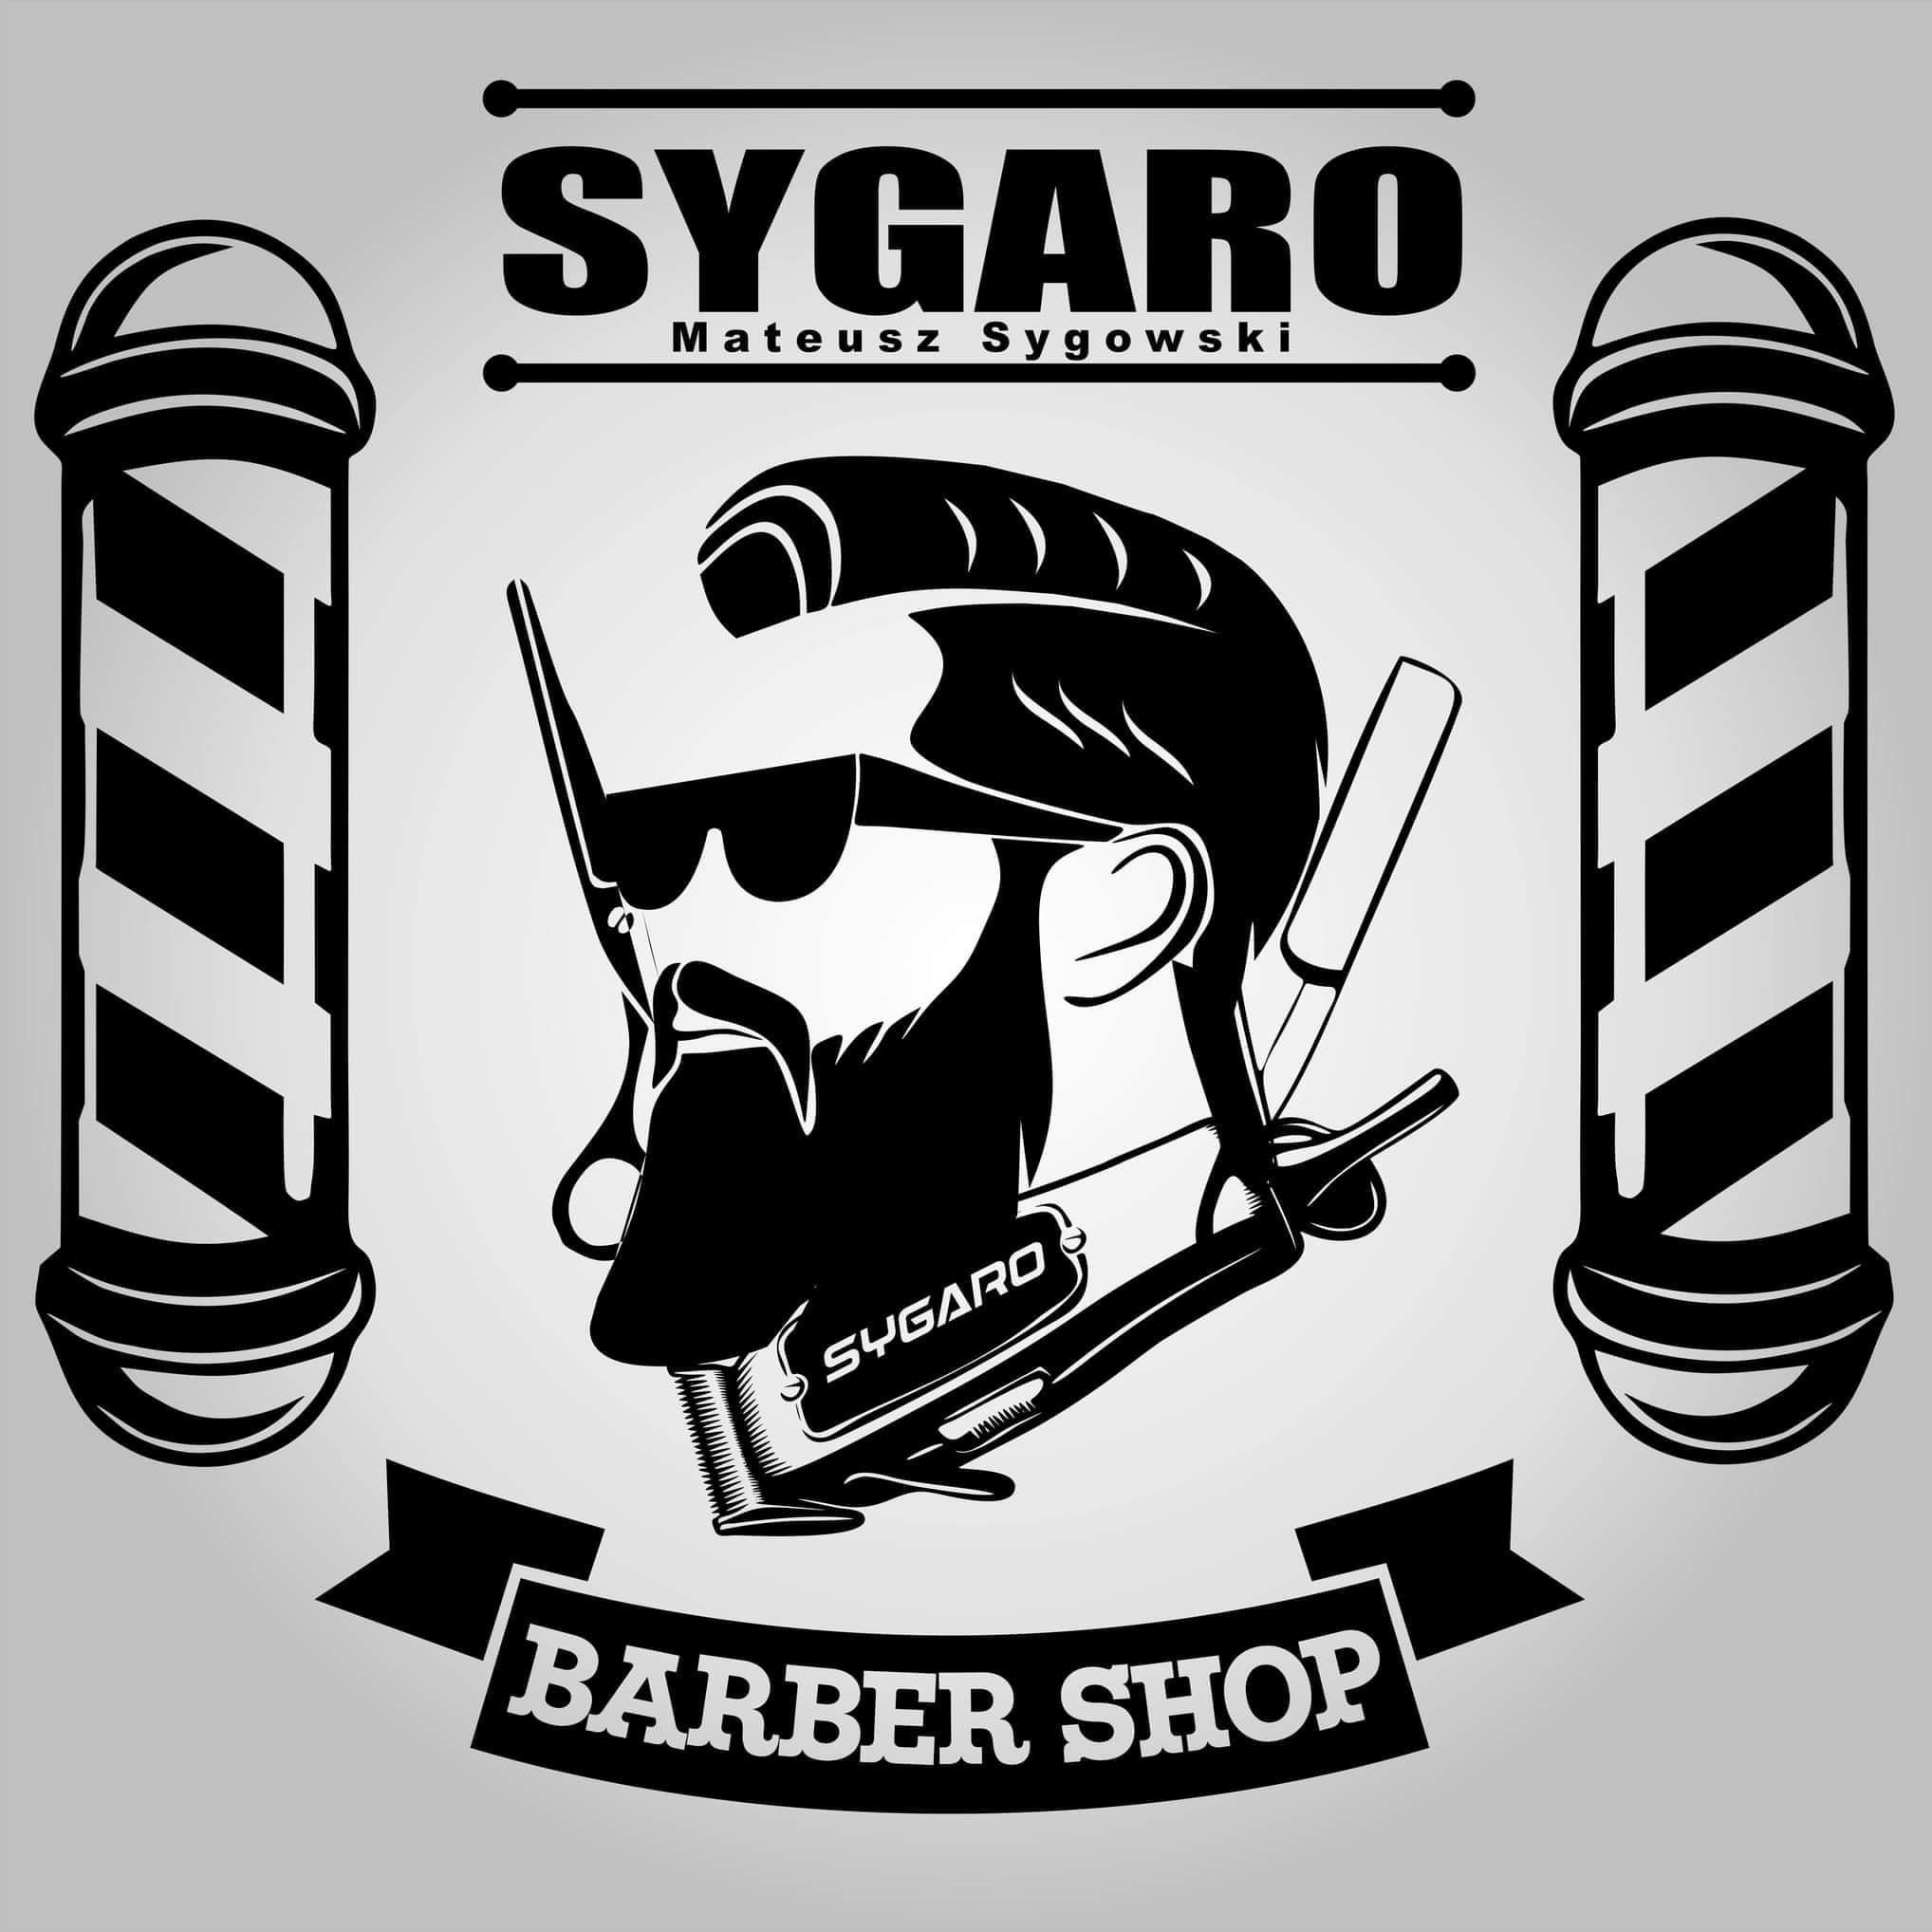 BarberShop Sygaro, Mławska 17, 1a, 87-500, Rypin